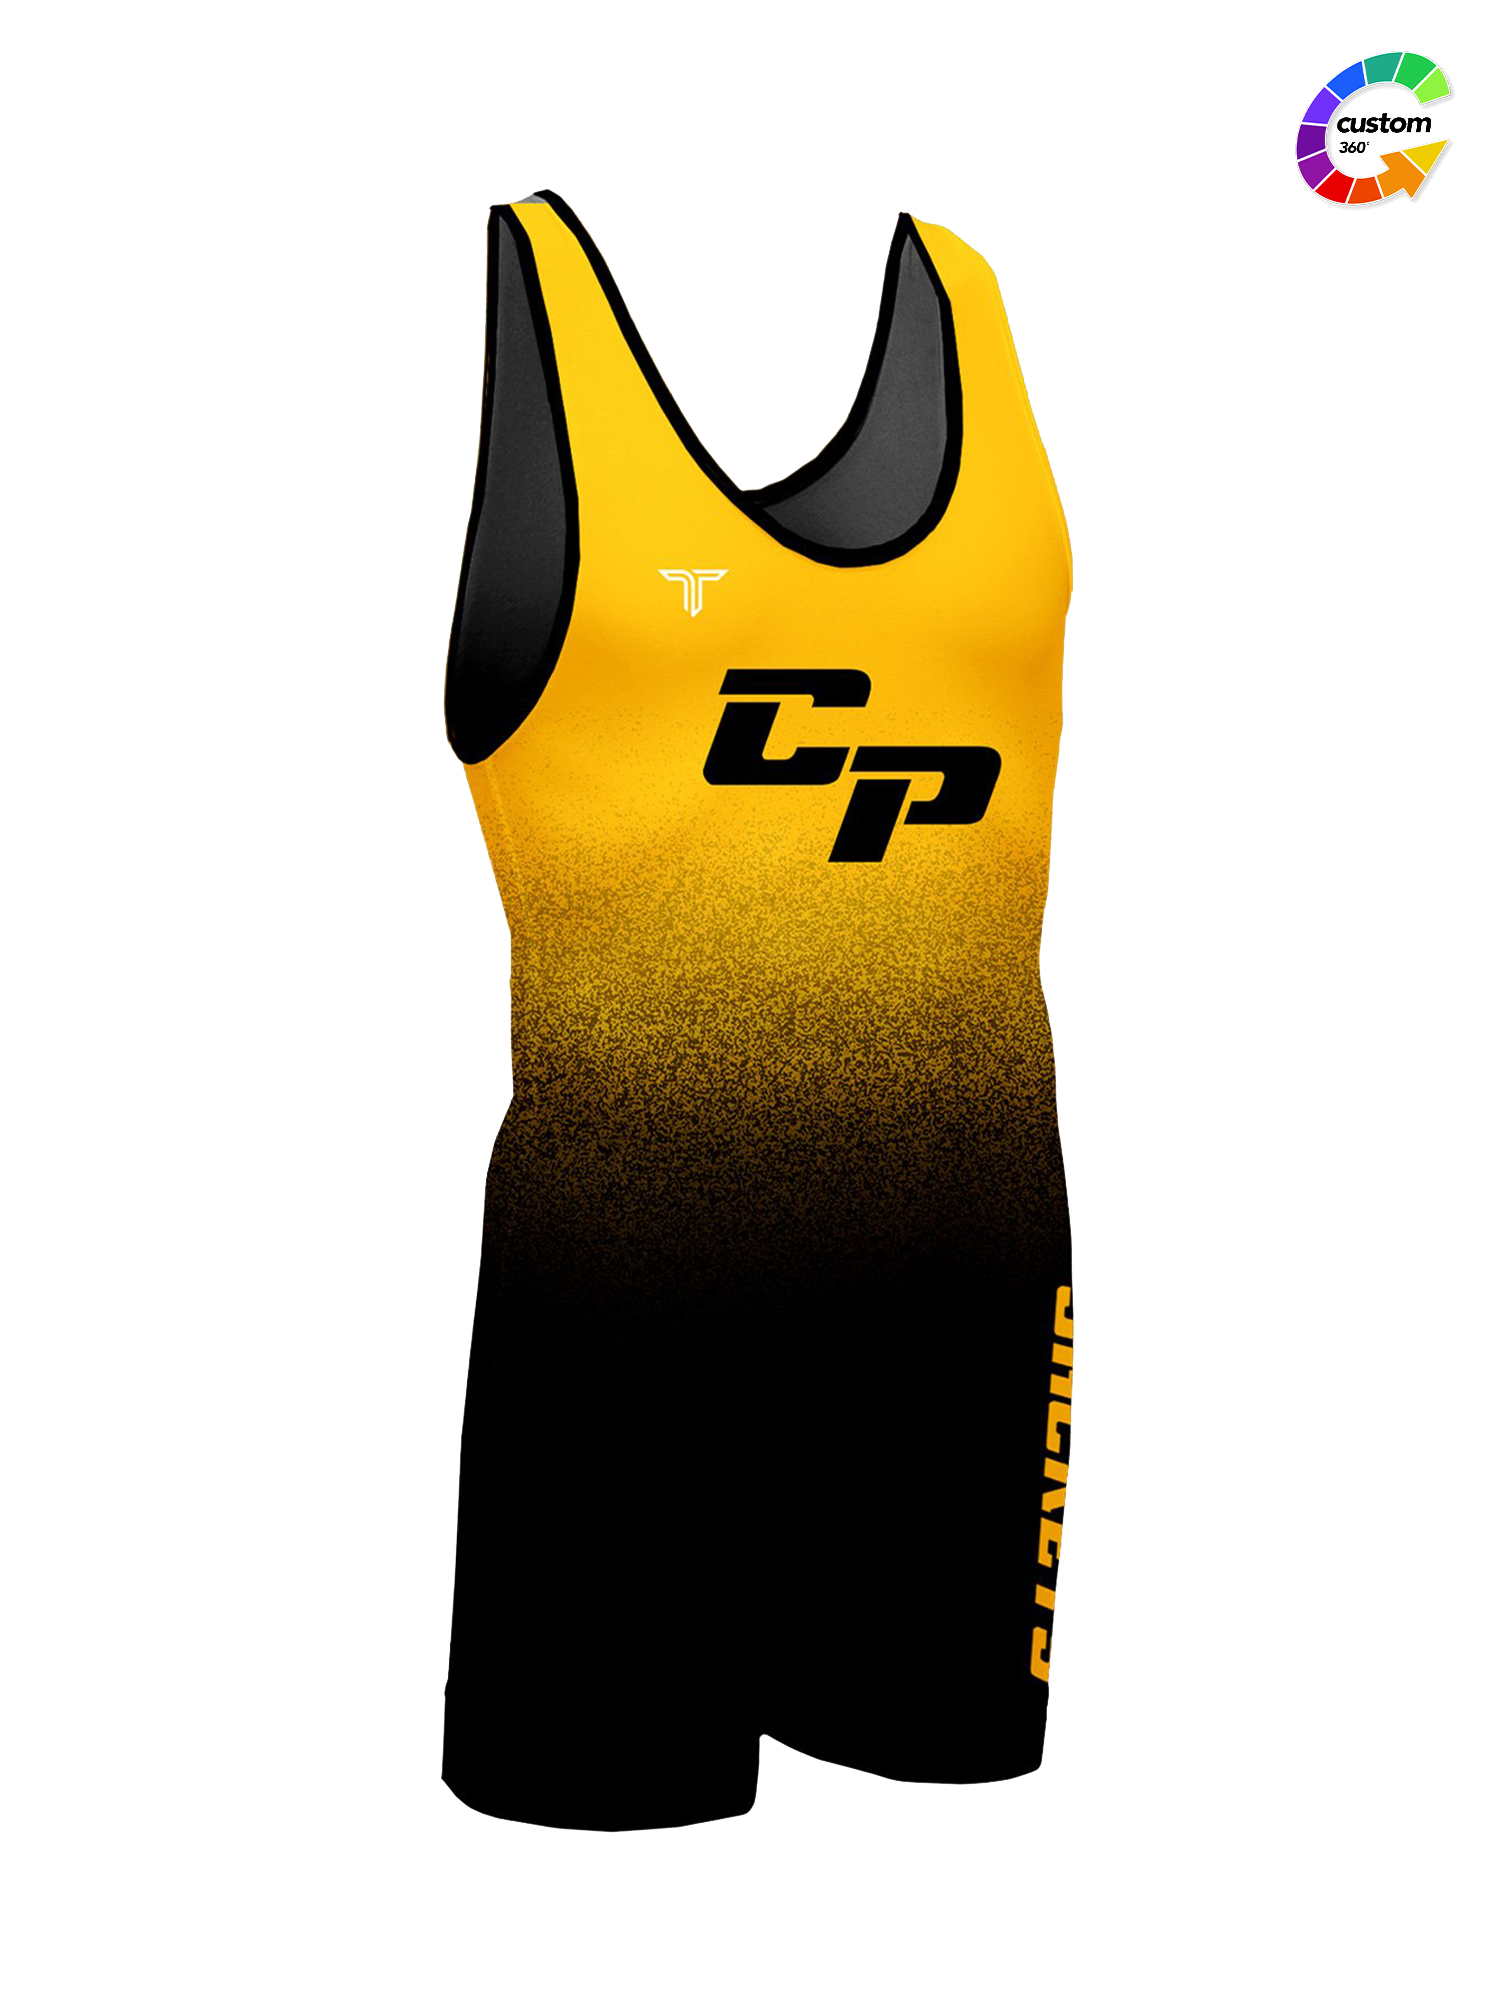 Custom louis vuitton wrestling gear bra logos